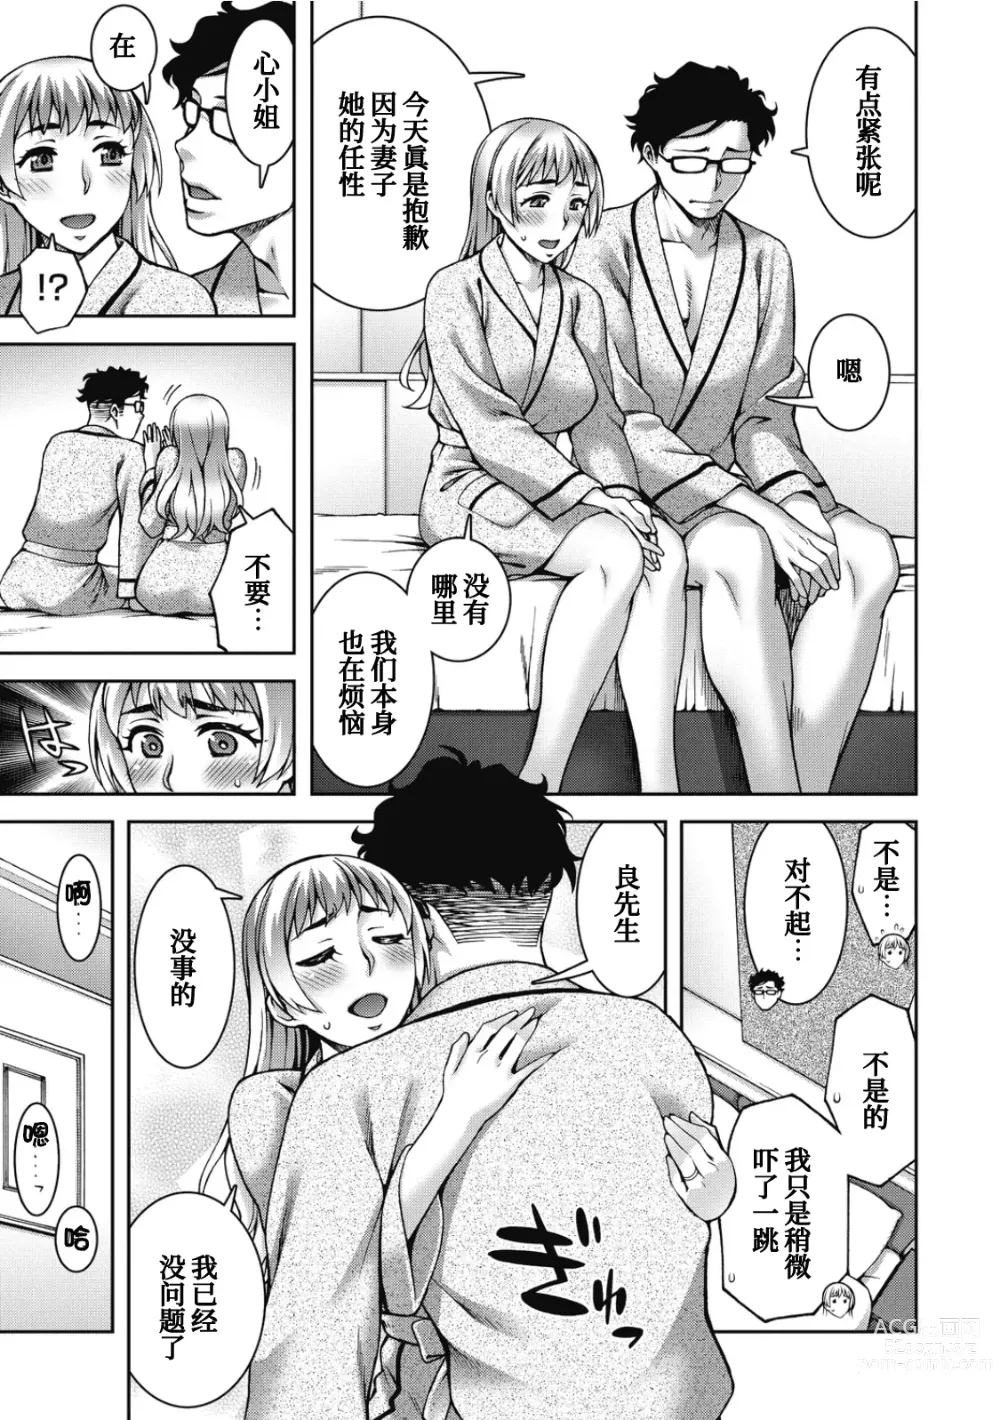 Page 6 of manga Aijou Koukan